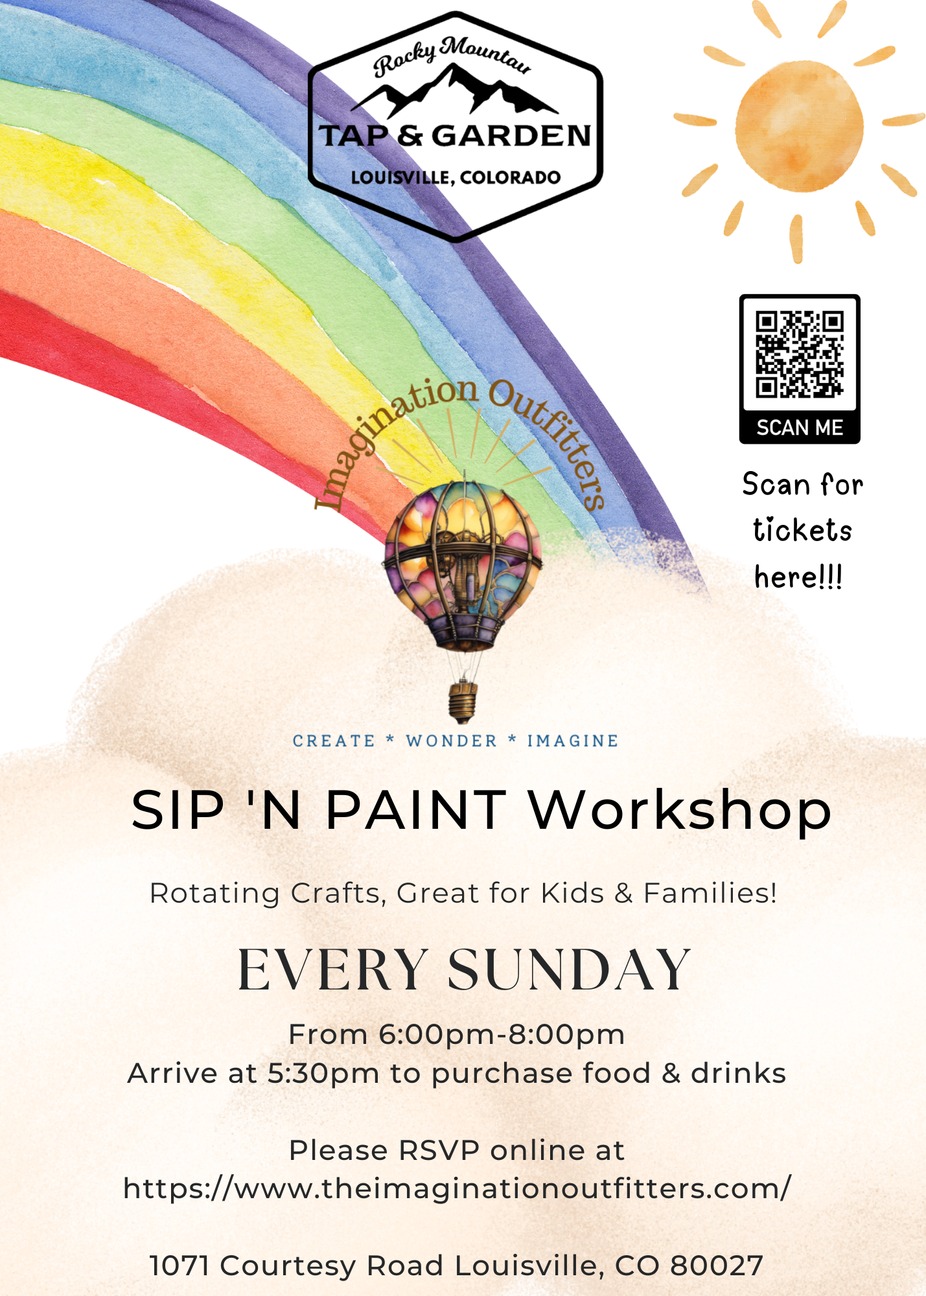 Sunday Paint 'N Sip event photo